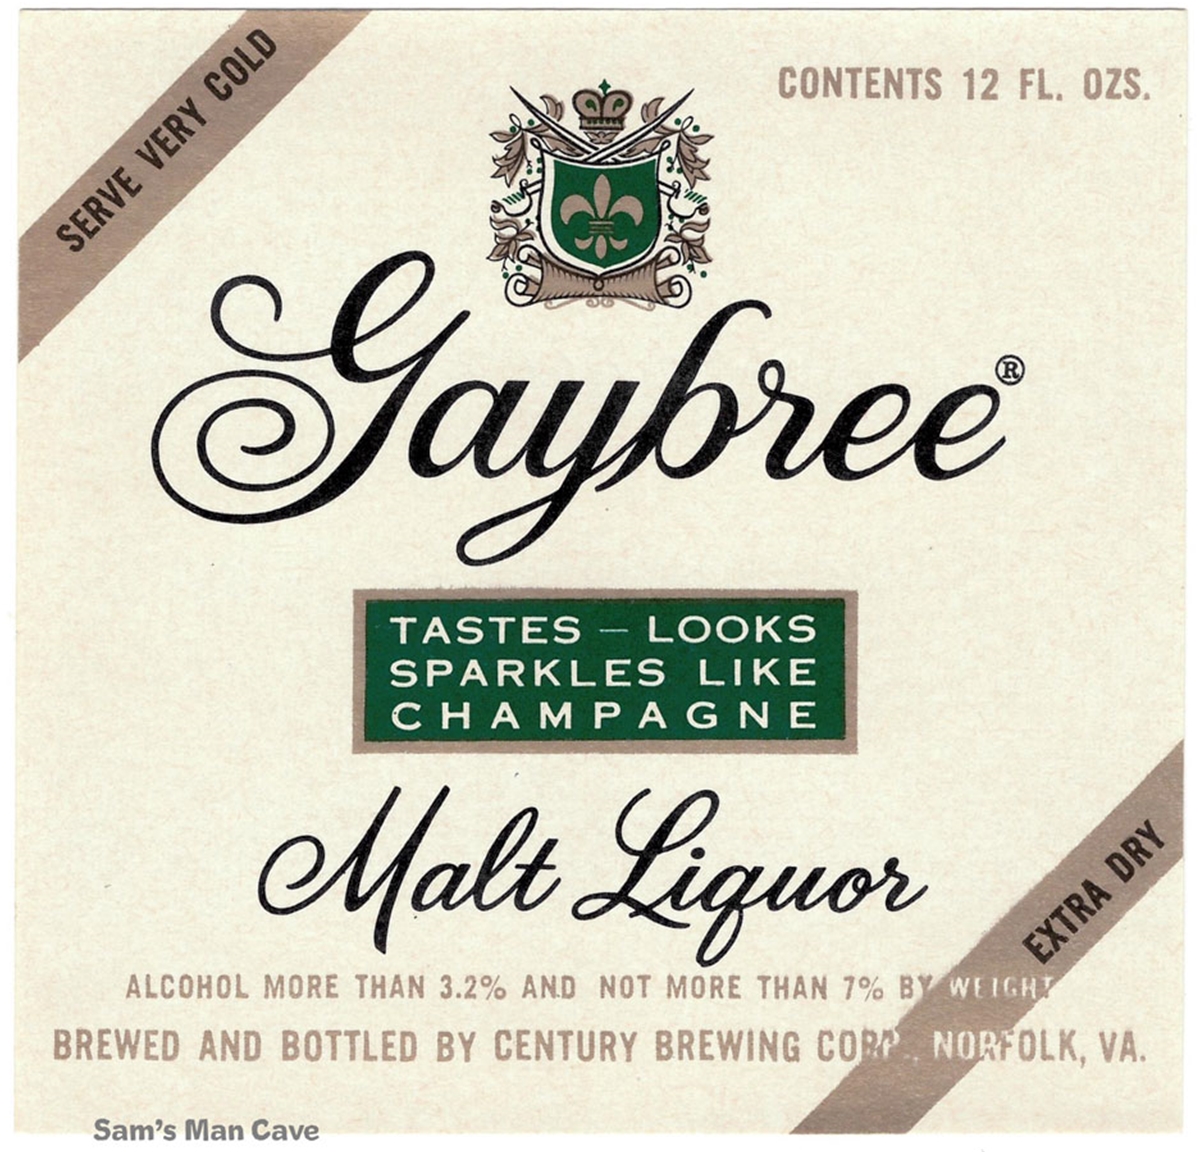 Gaybree Malt Liquor Label